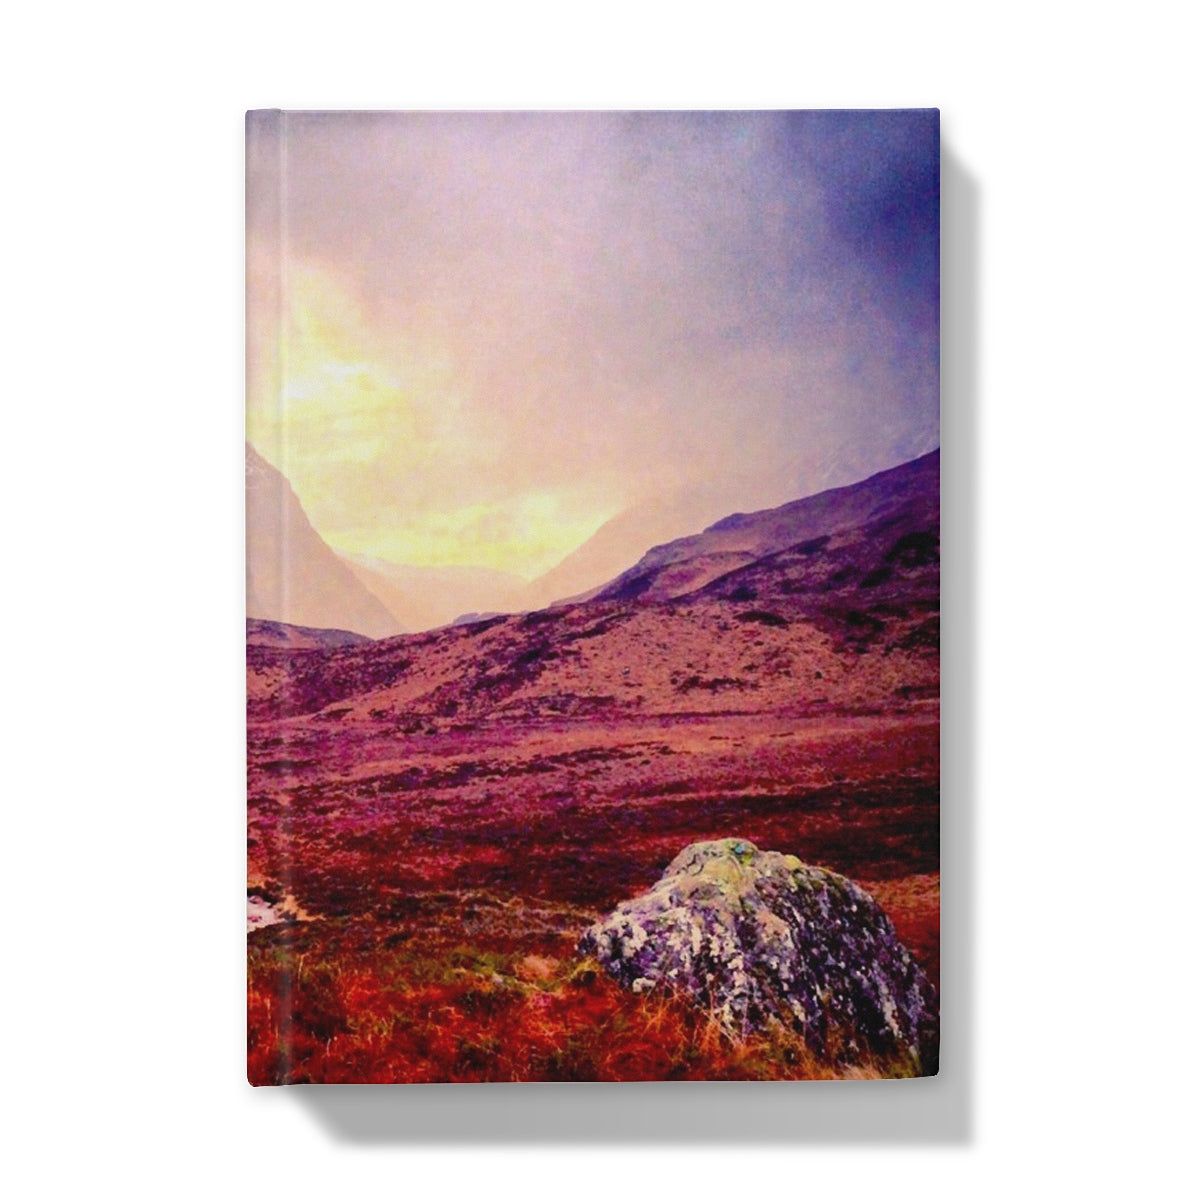 A Brooding Glencoe Art Gifts Hardback Journal-Journals & Notebooks-Glencoe Art Gallery-5"x7"-Lined-Paintings, Prints, Homeware, Art Gifts From Scotland By Scottish Artist Kevin Hunter